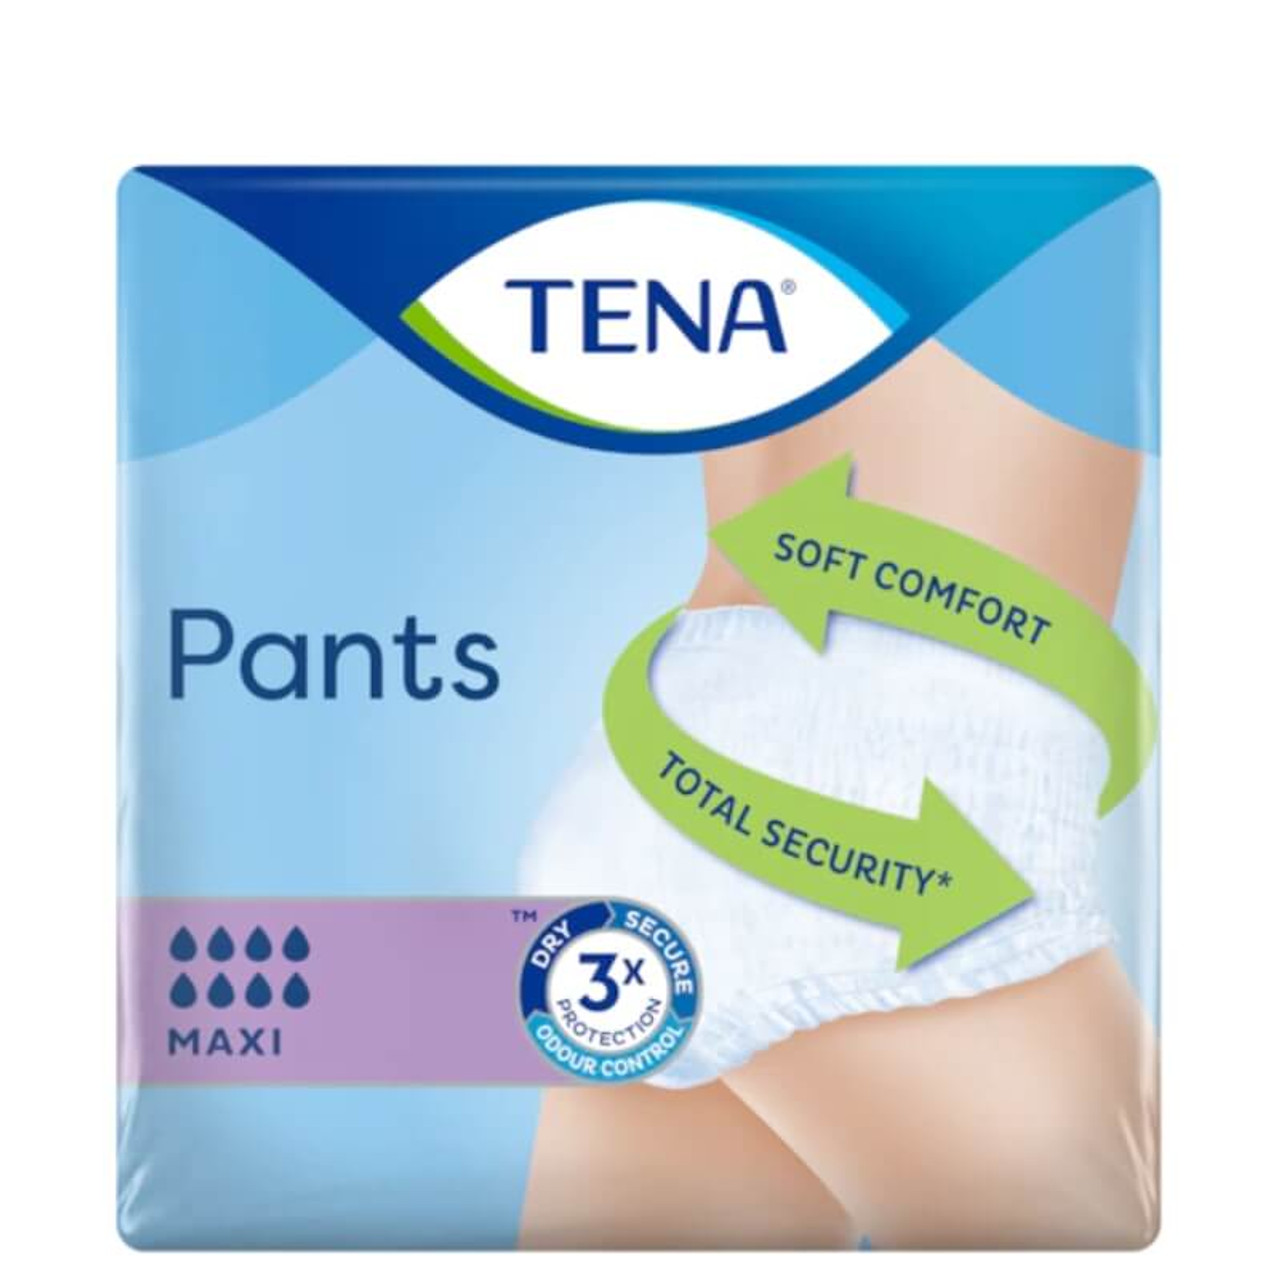 Tena Pants Maxi Large : Amazon.co.uk: Health & Personal Care